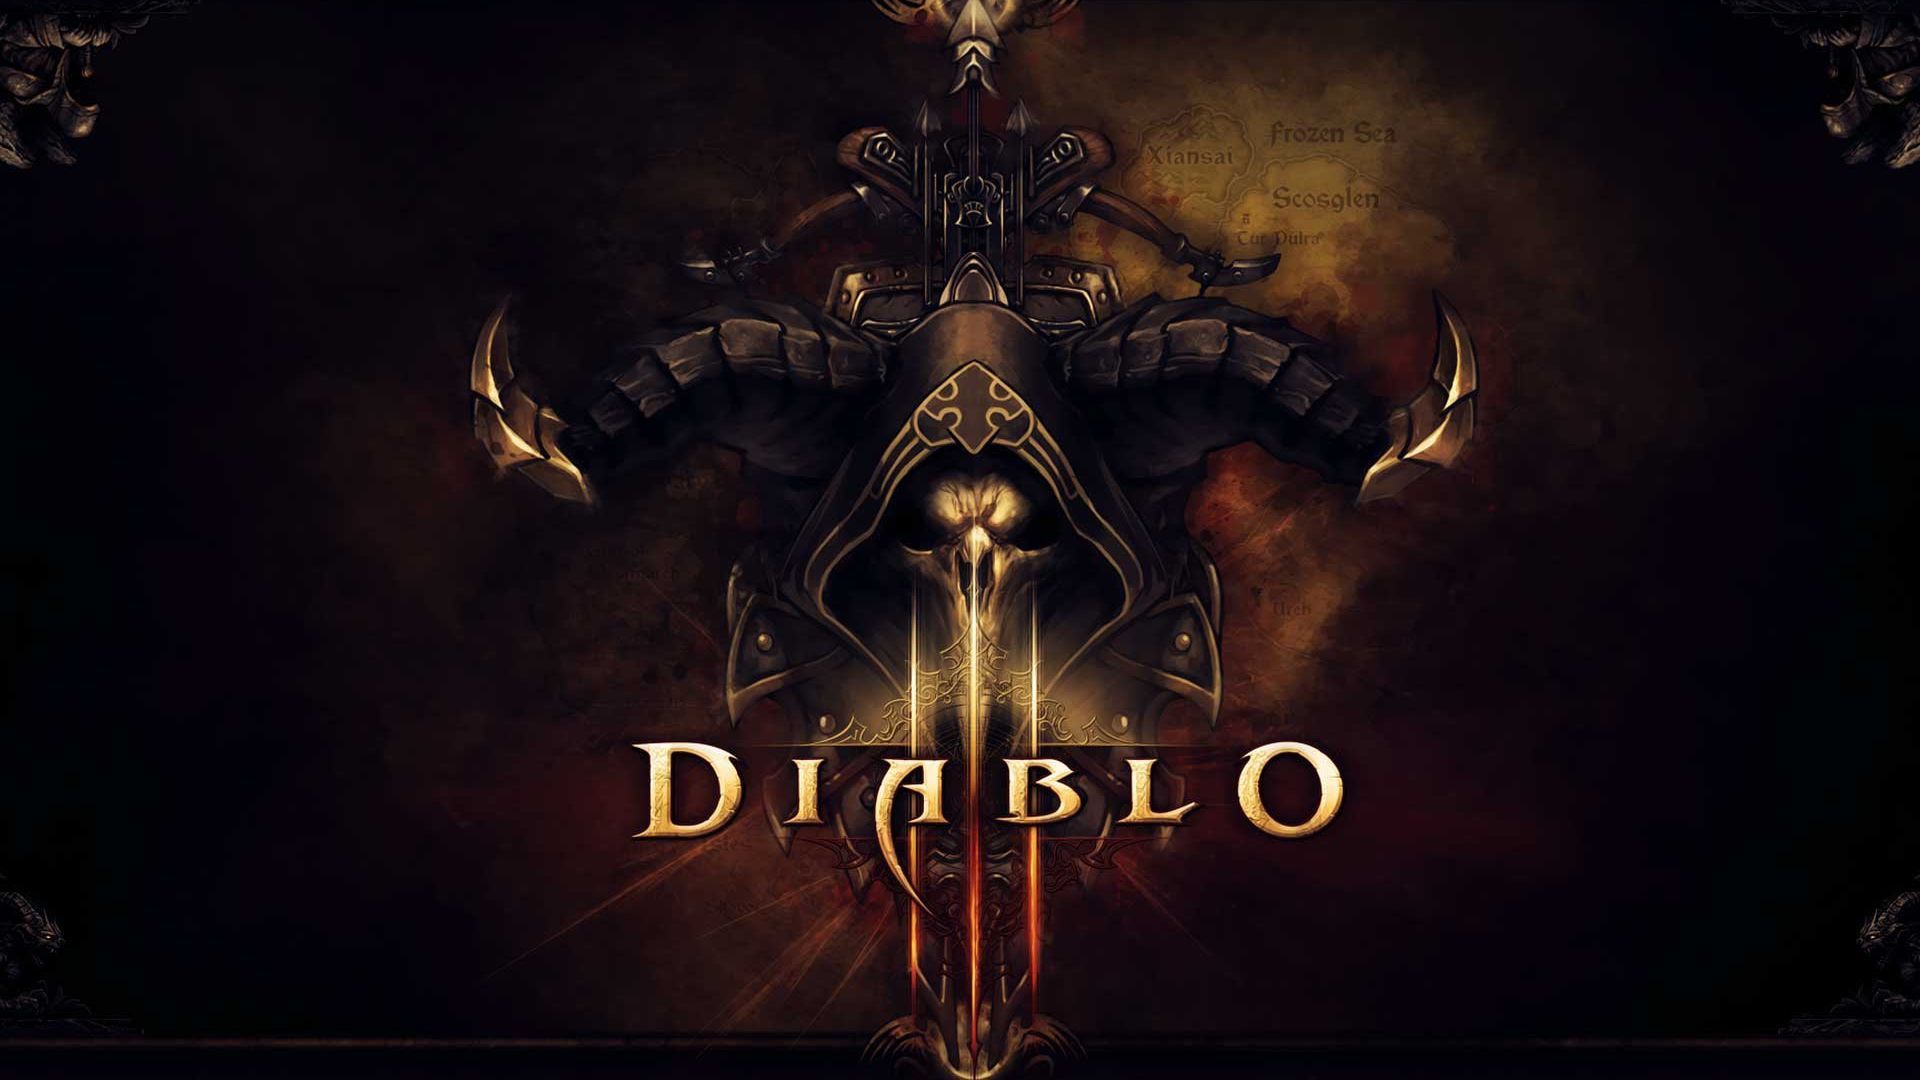 Diablo Wallpaper 1080p